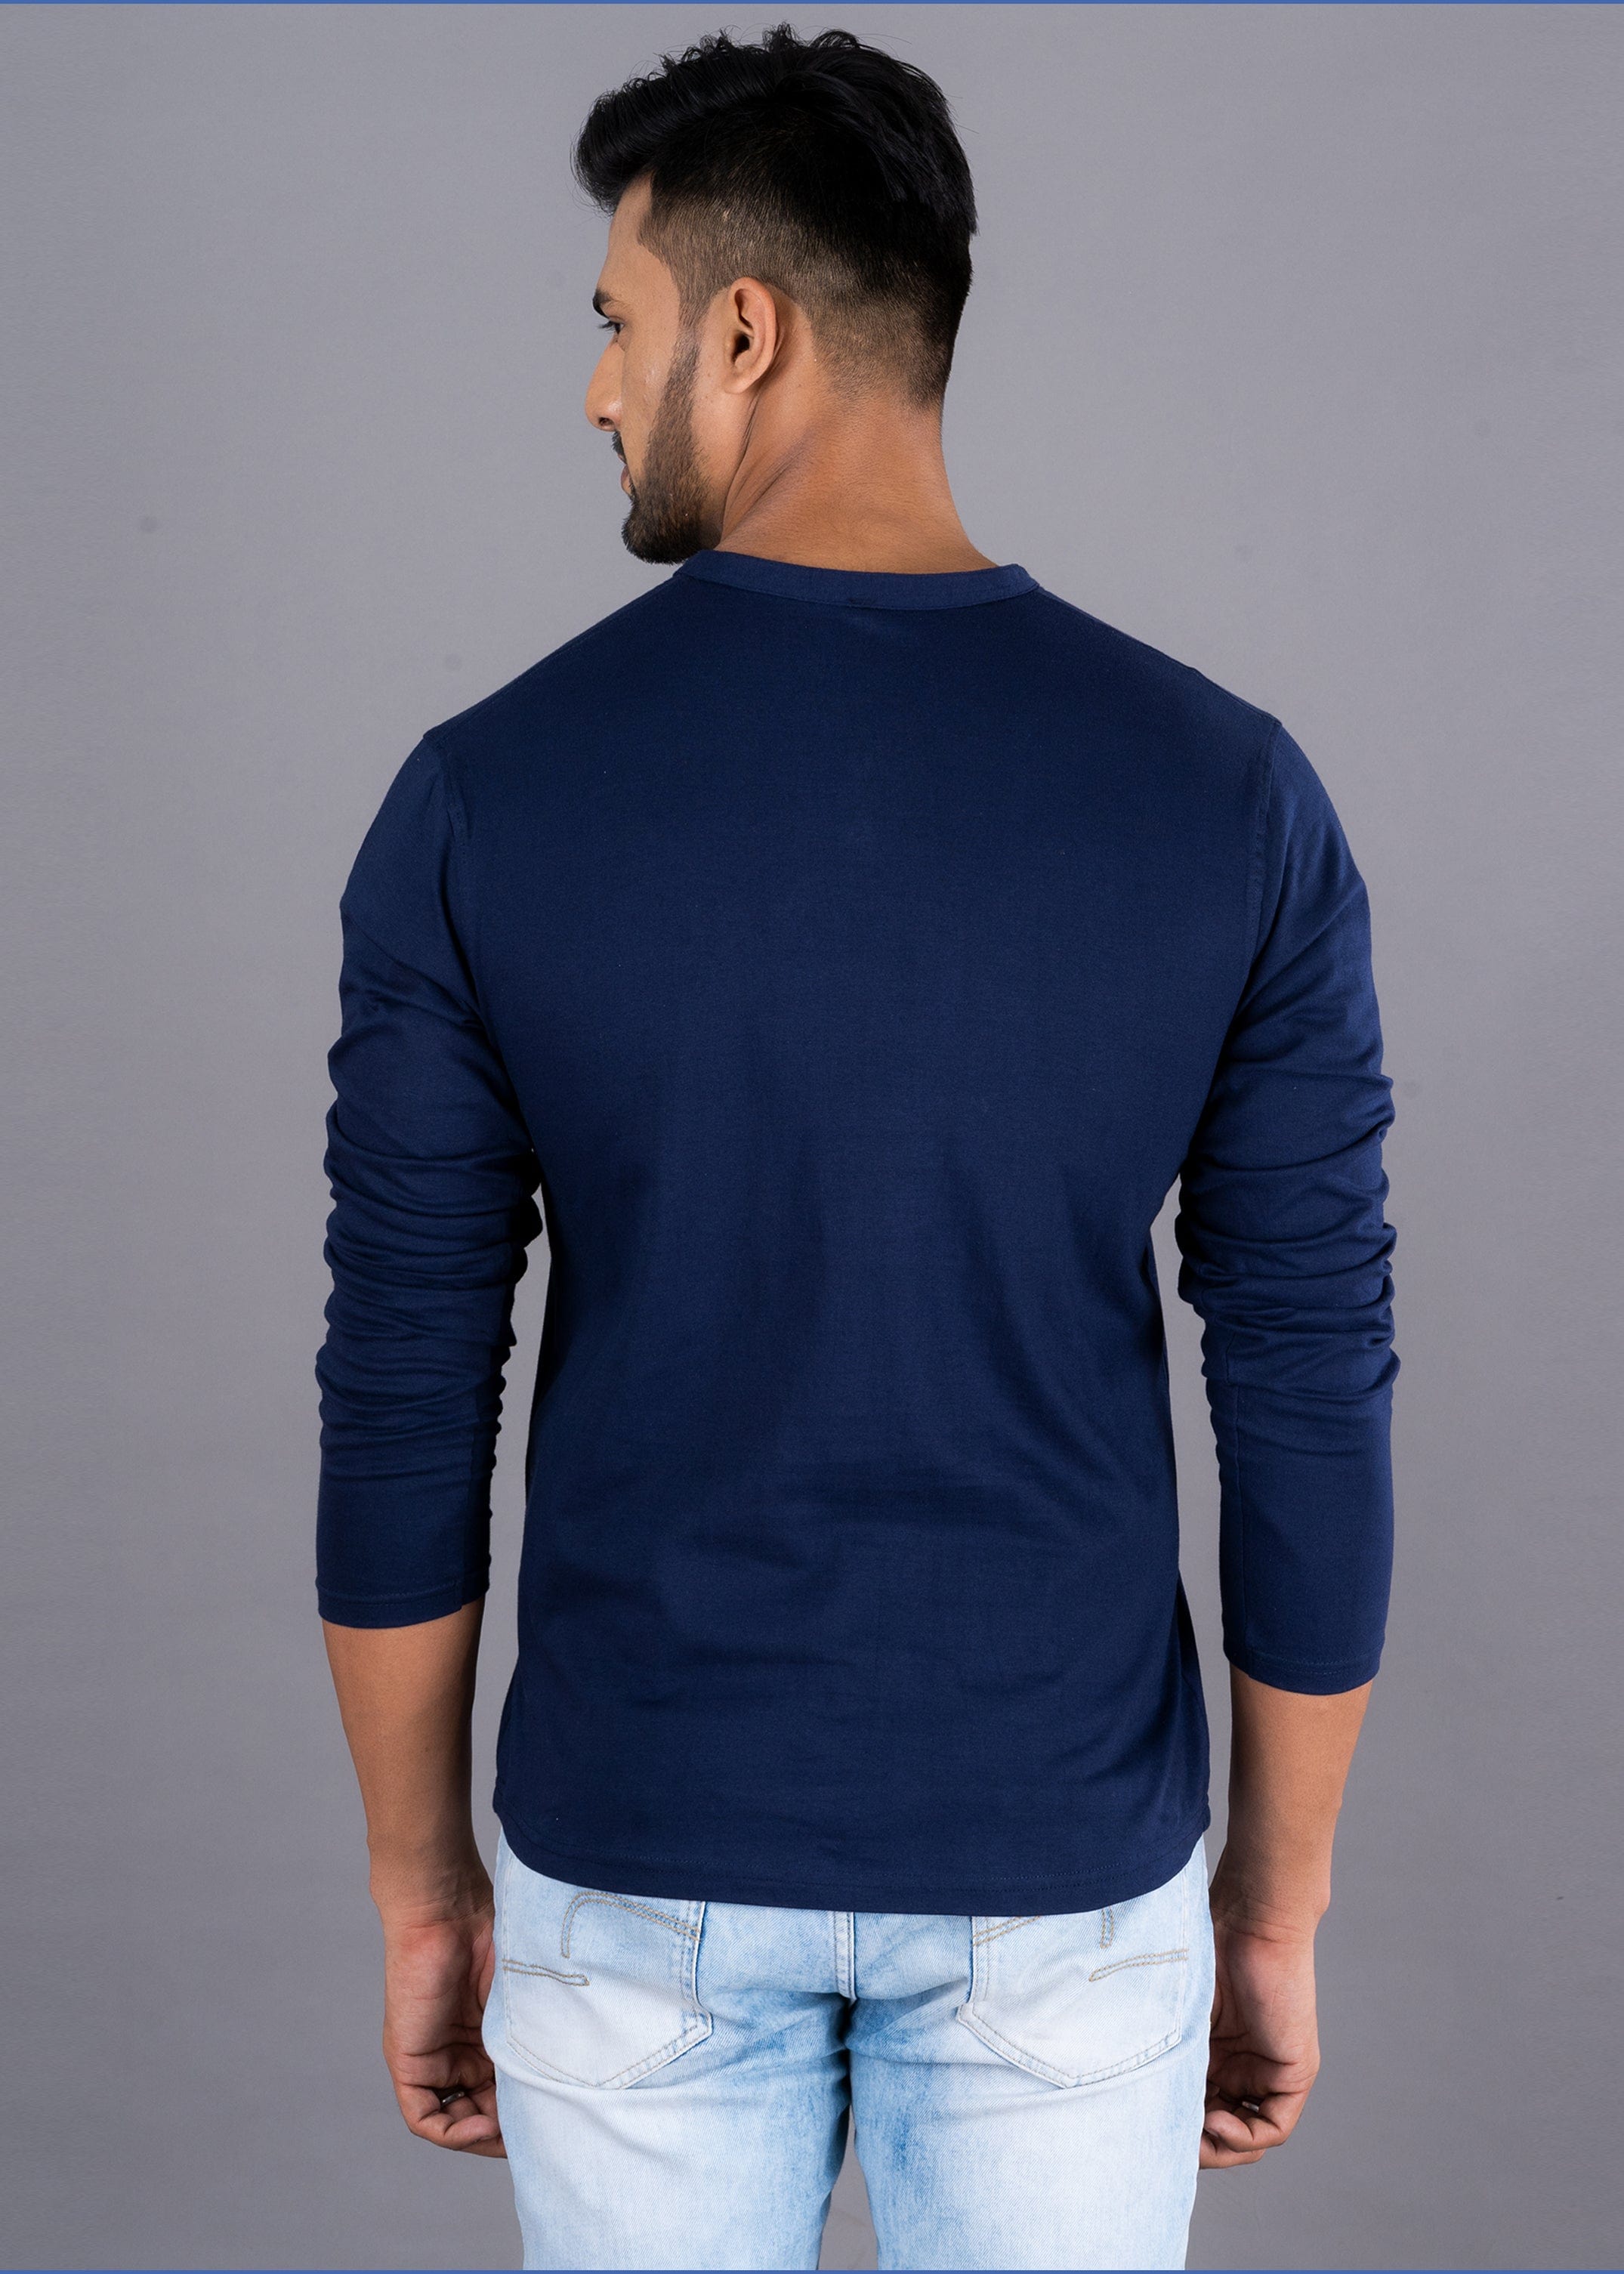 Solid Full Sleeve Premium Cotton Henley T-shirt For Men - Navy Blue